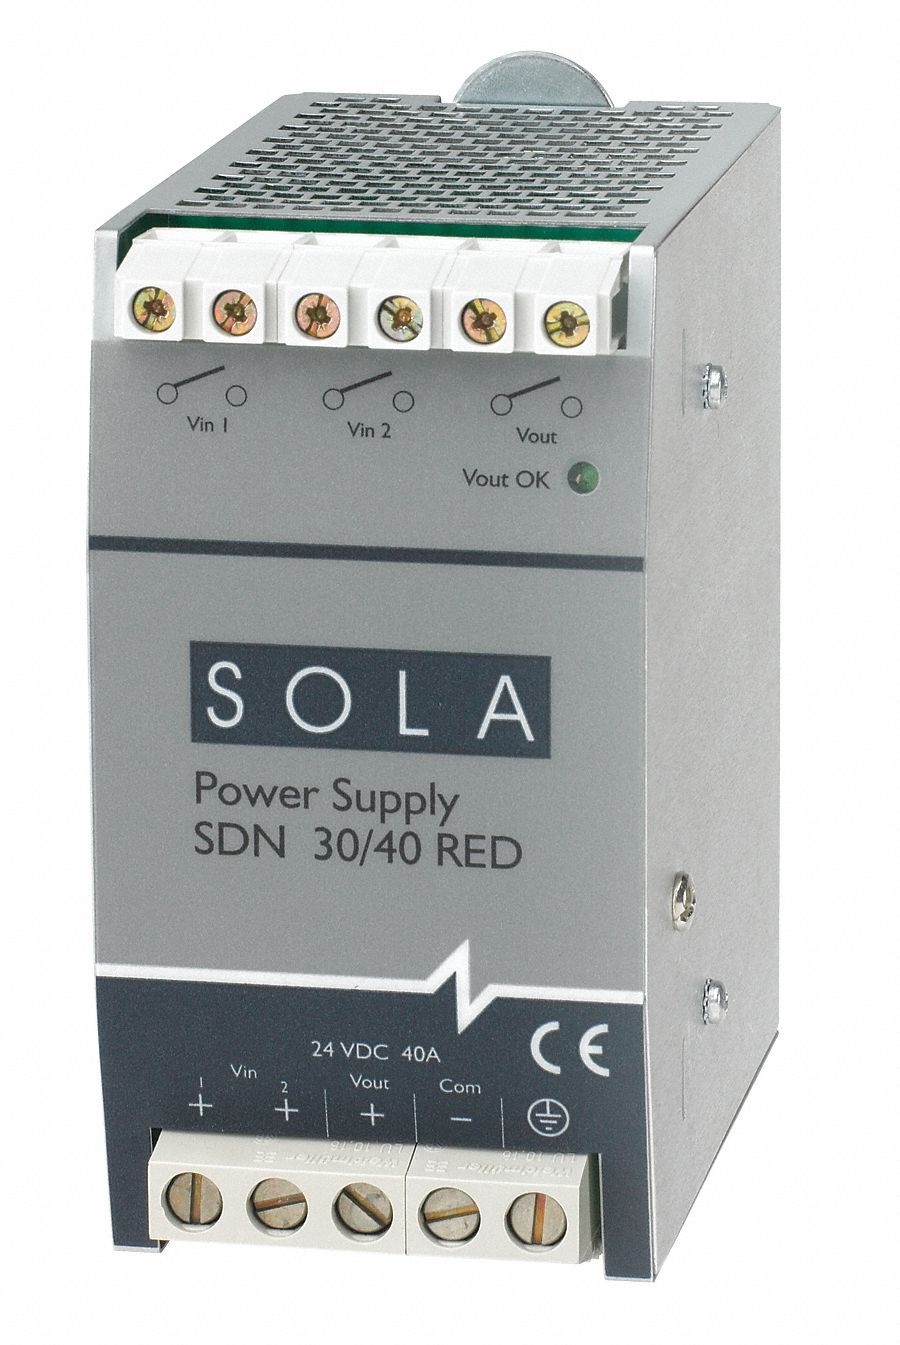 10G789 - Power Supply Redundancy Module 24VDC Out